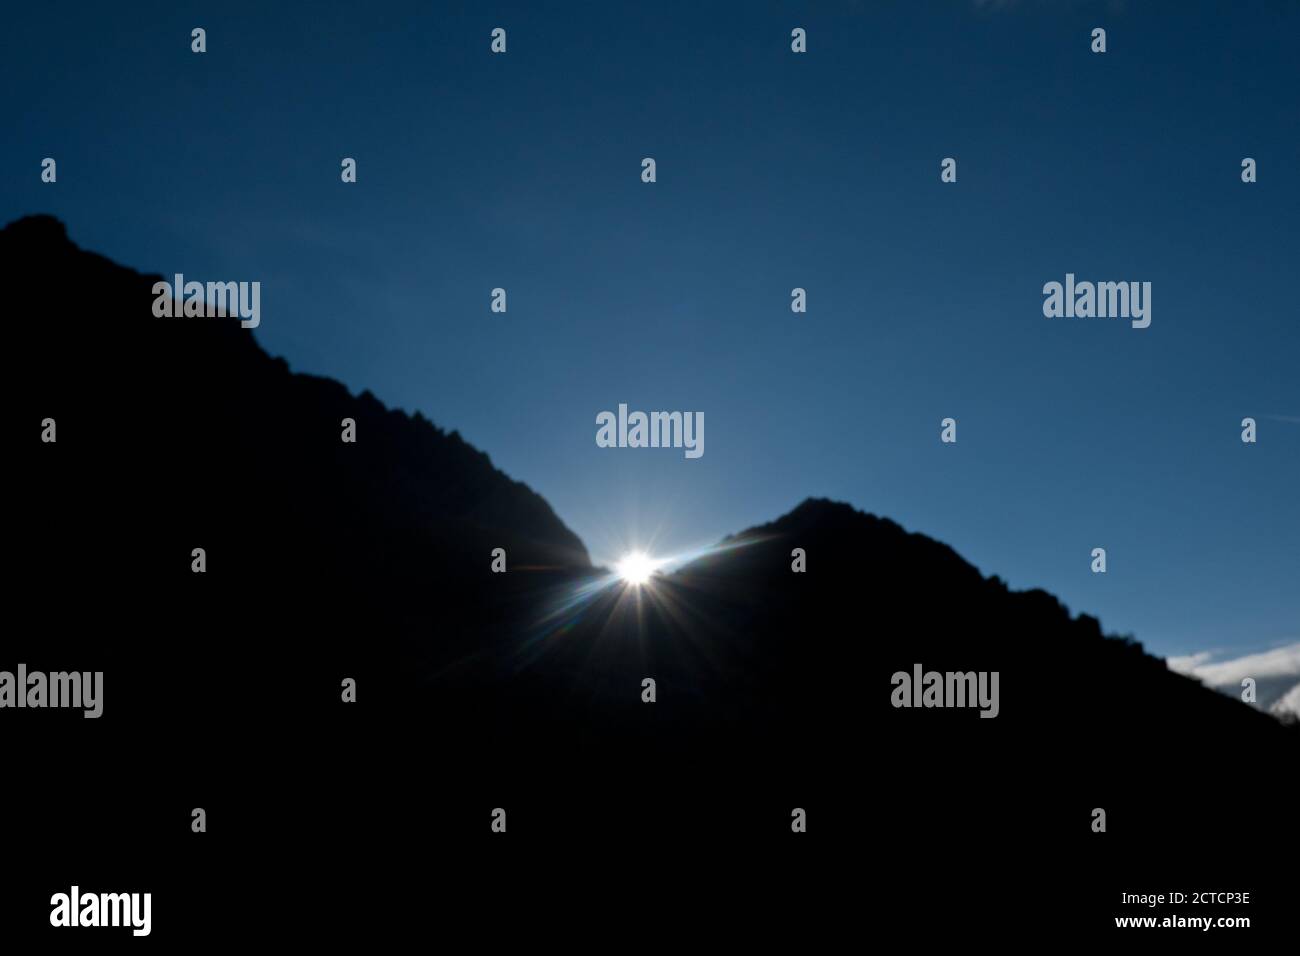 Sunrise over mountain silhouette in dark blue sky in the Alps Stock Photo